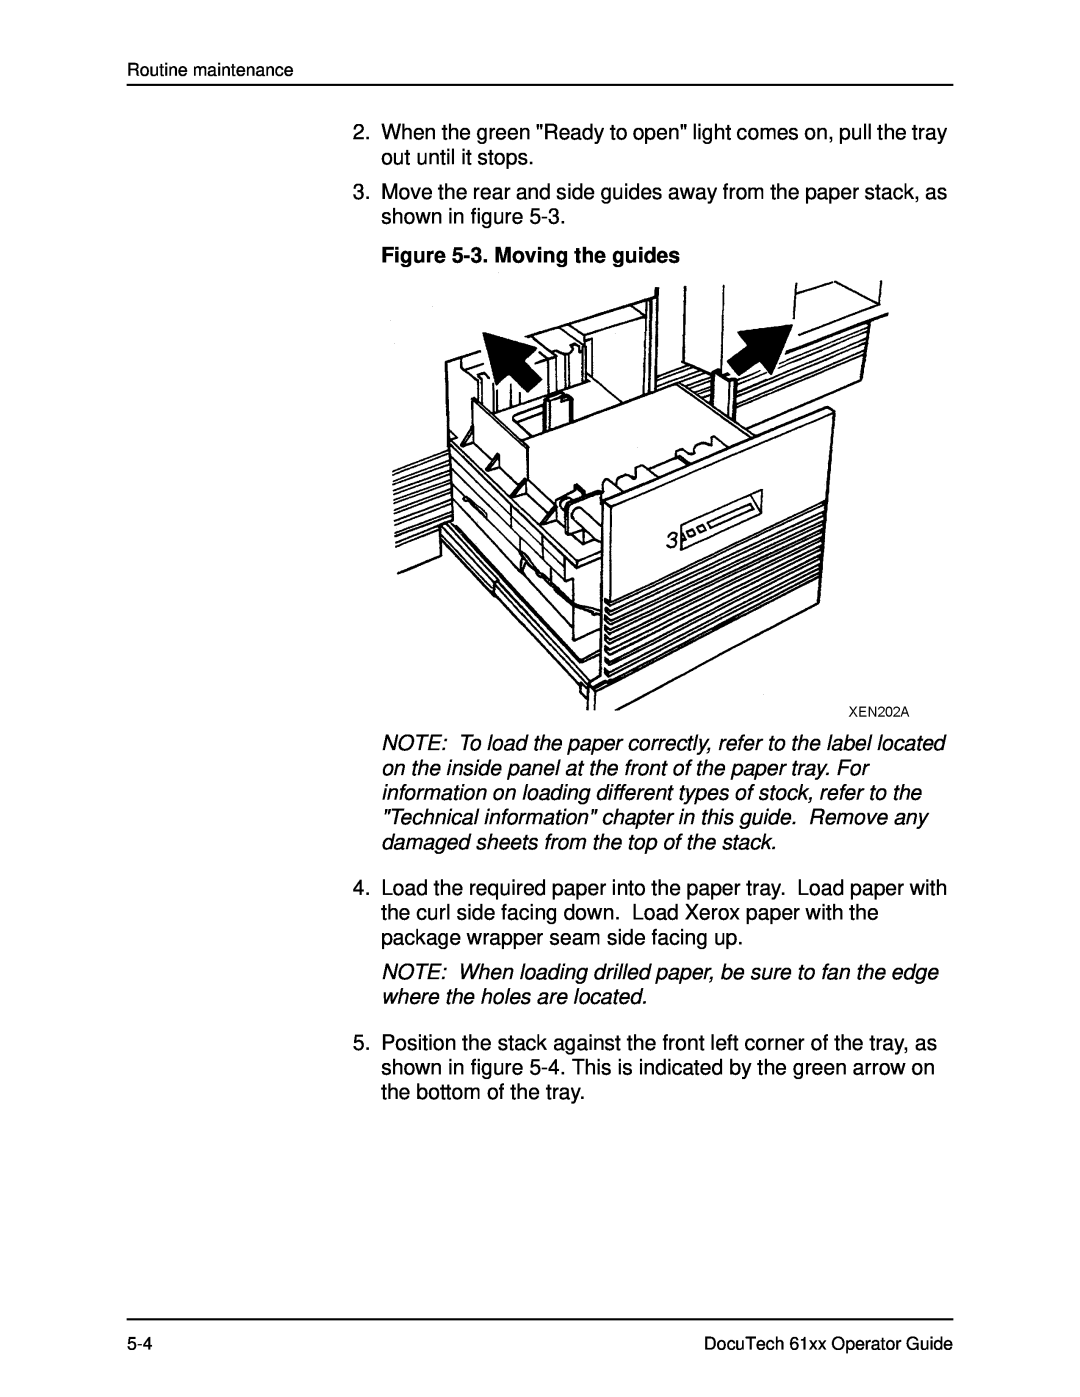 Xerox manual 3. Moving the guides, Routine maintenance, DocuTech 61xx Operator Guide 